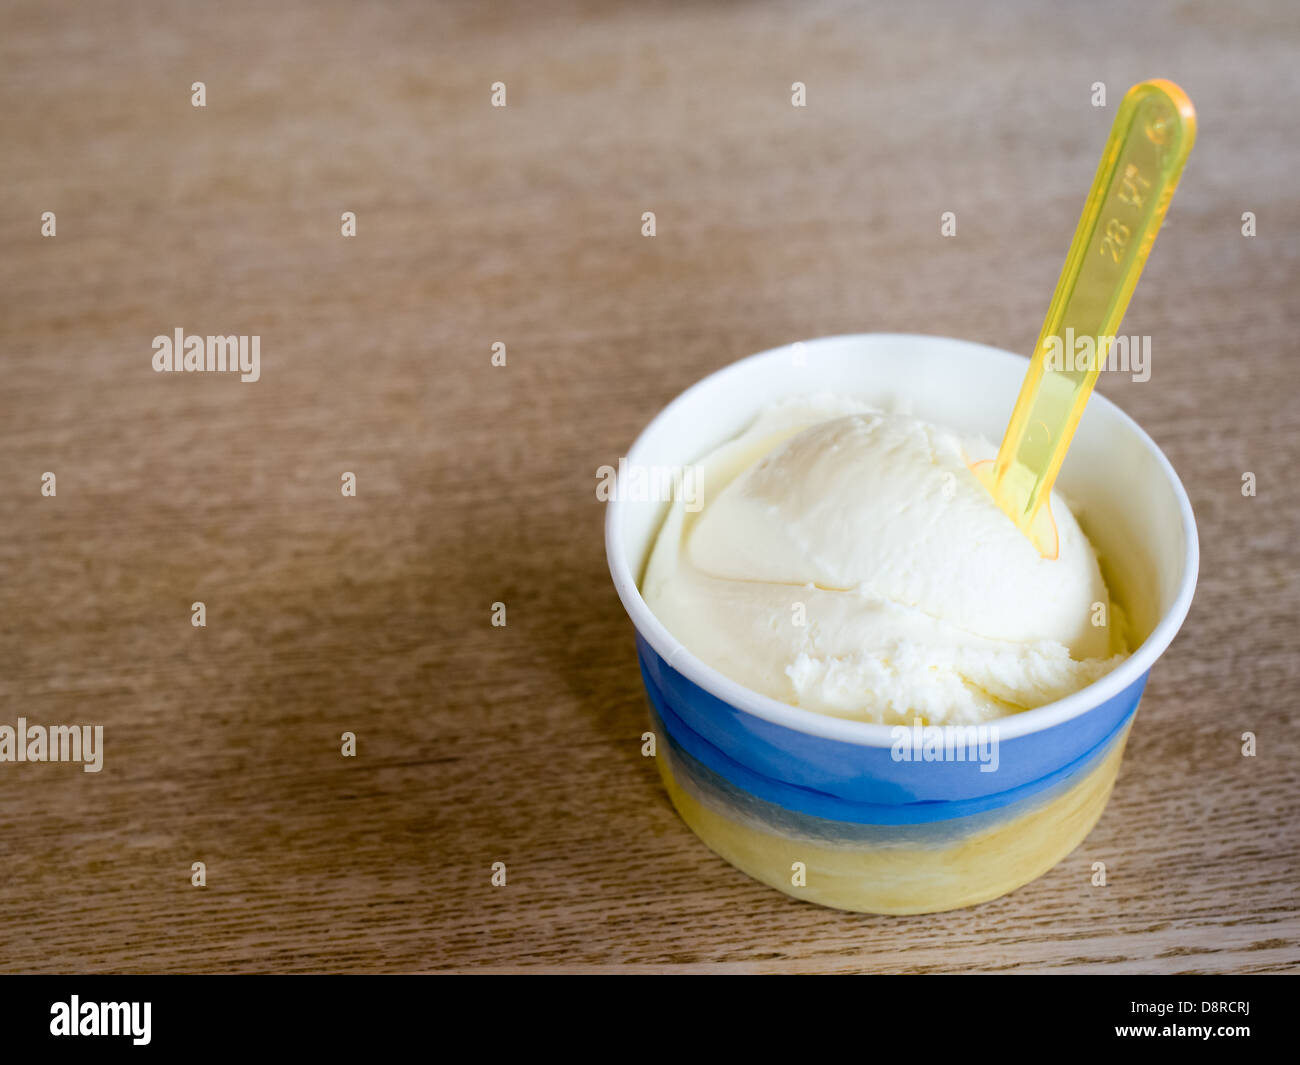 https://c8.alamy.com/comp/D8RCRJ/vanilla-ice-cream-tub-with-spoon-on-a-wooden-table-D8RCRJ.jpg